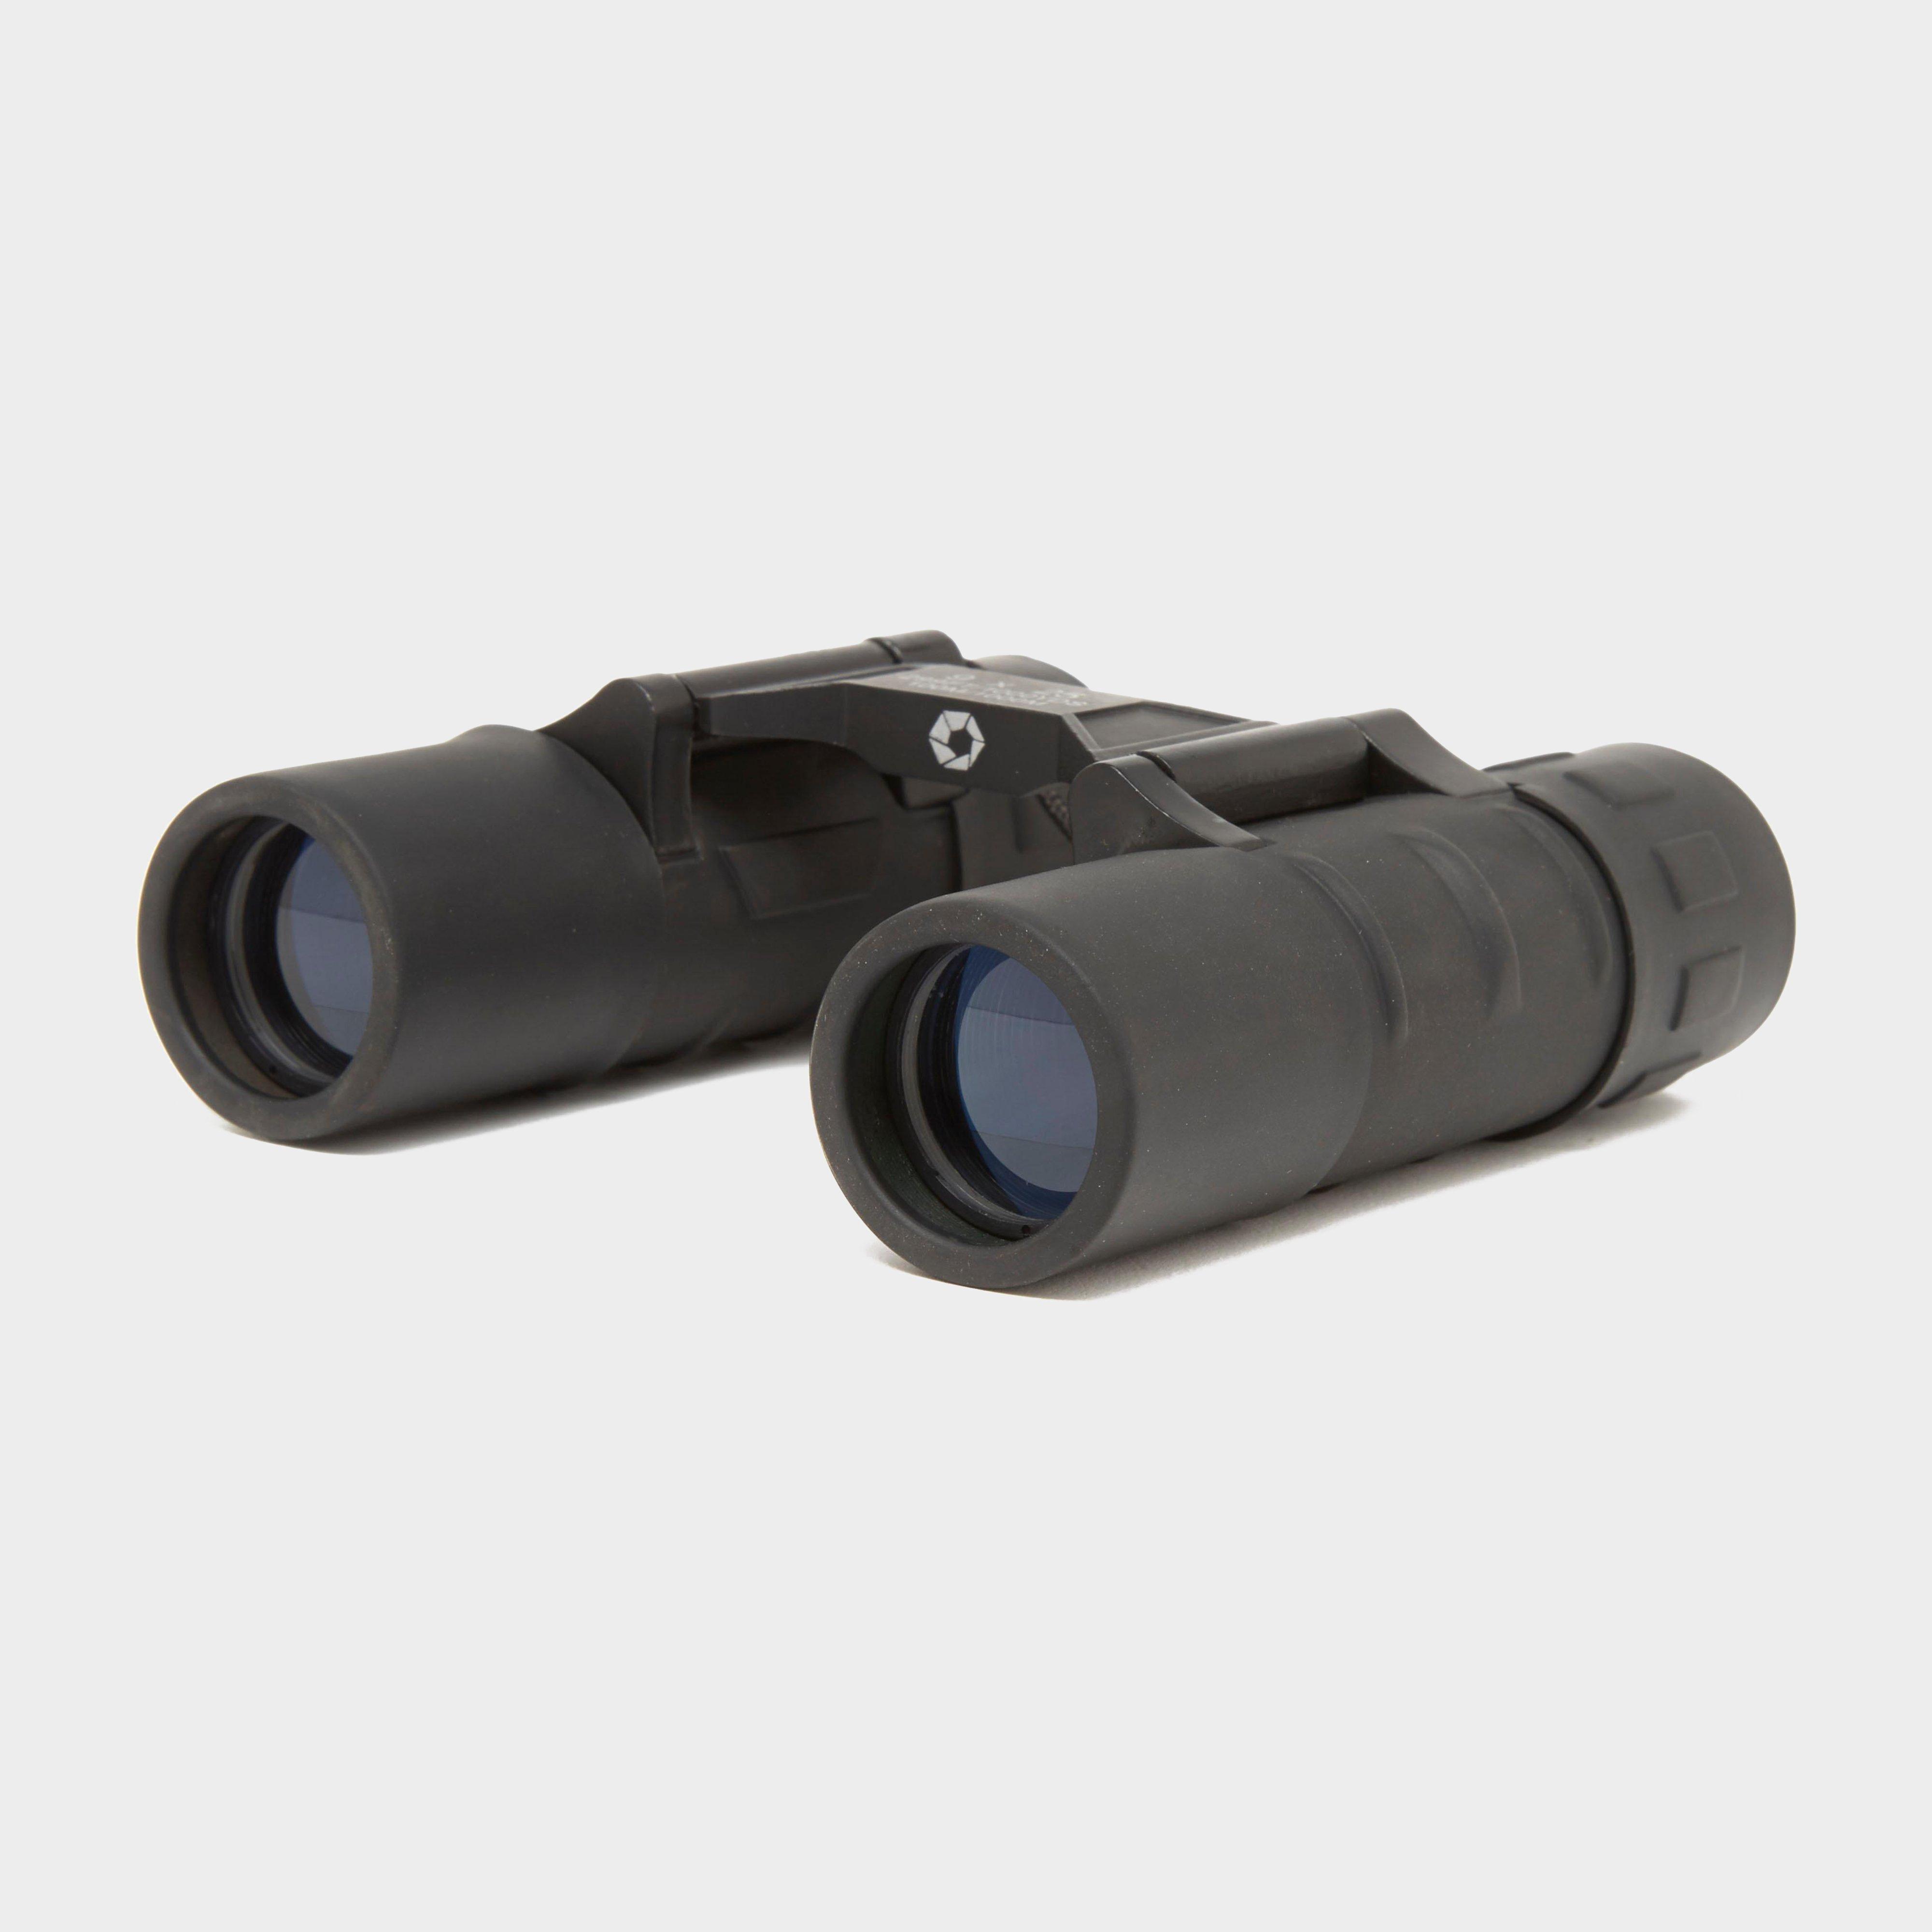  Barska Focus Free Binoculars (9 x 25)